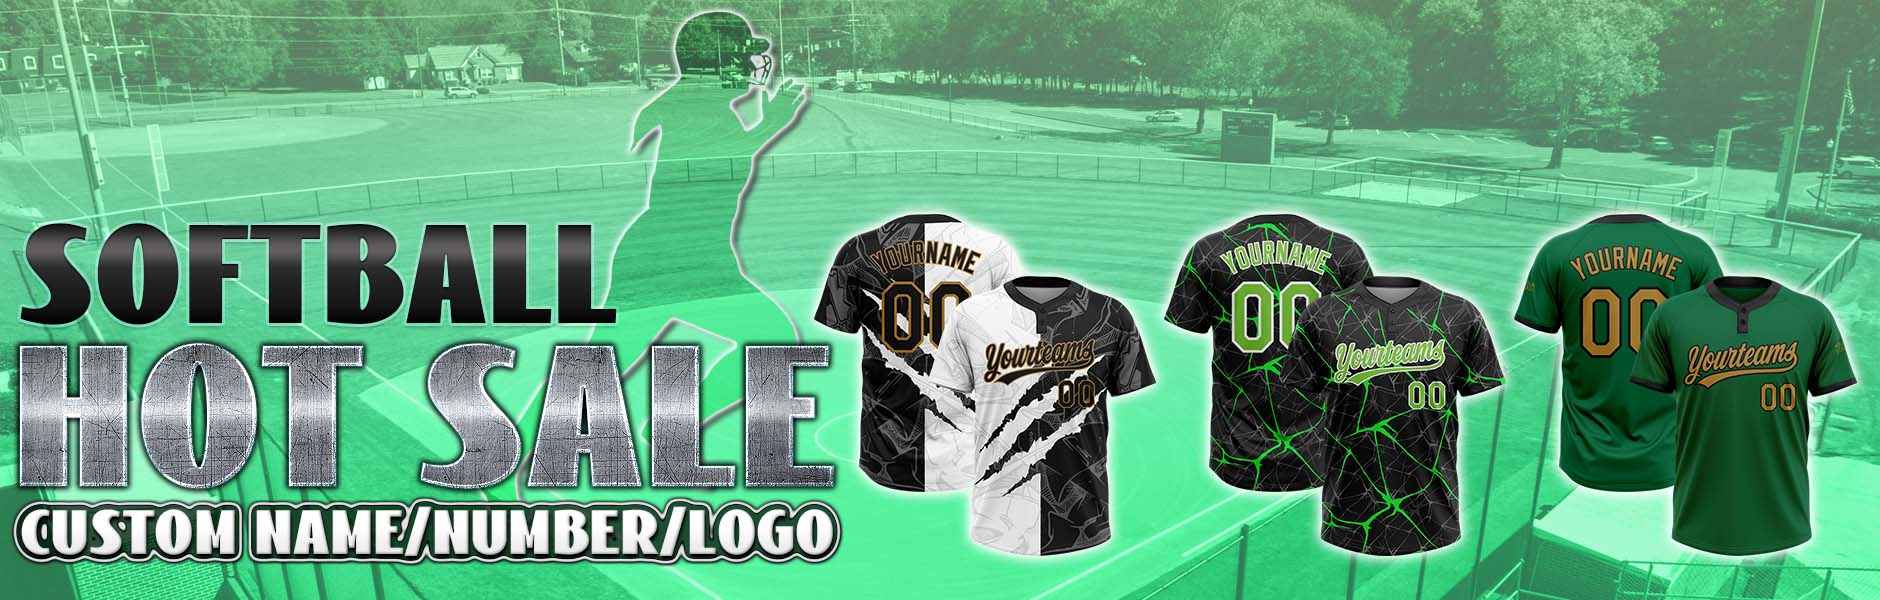 custom softball jersey hot sale